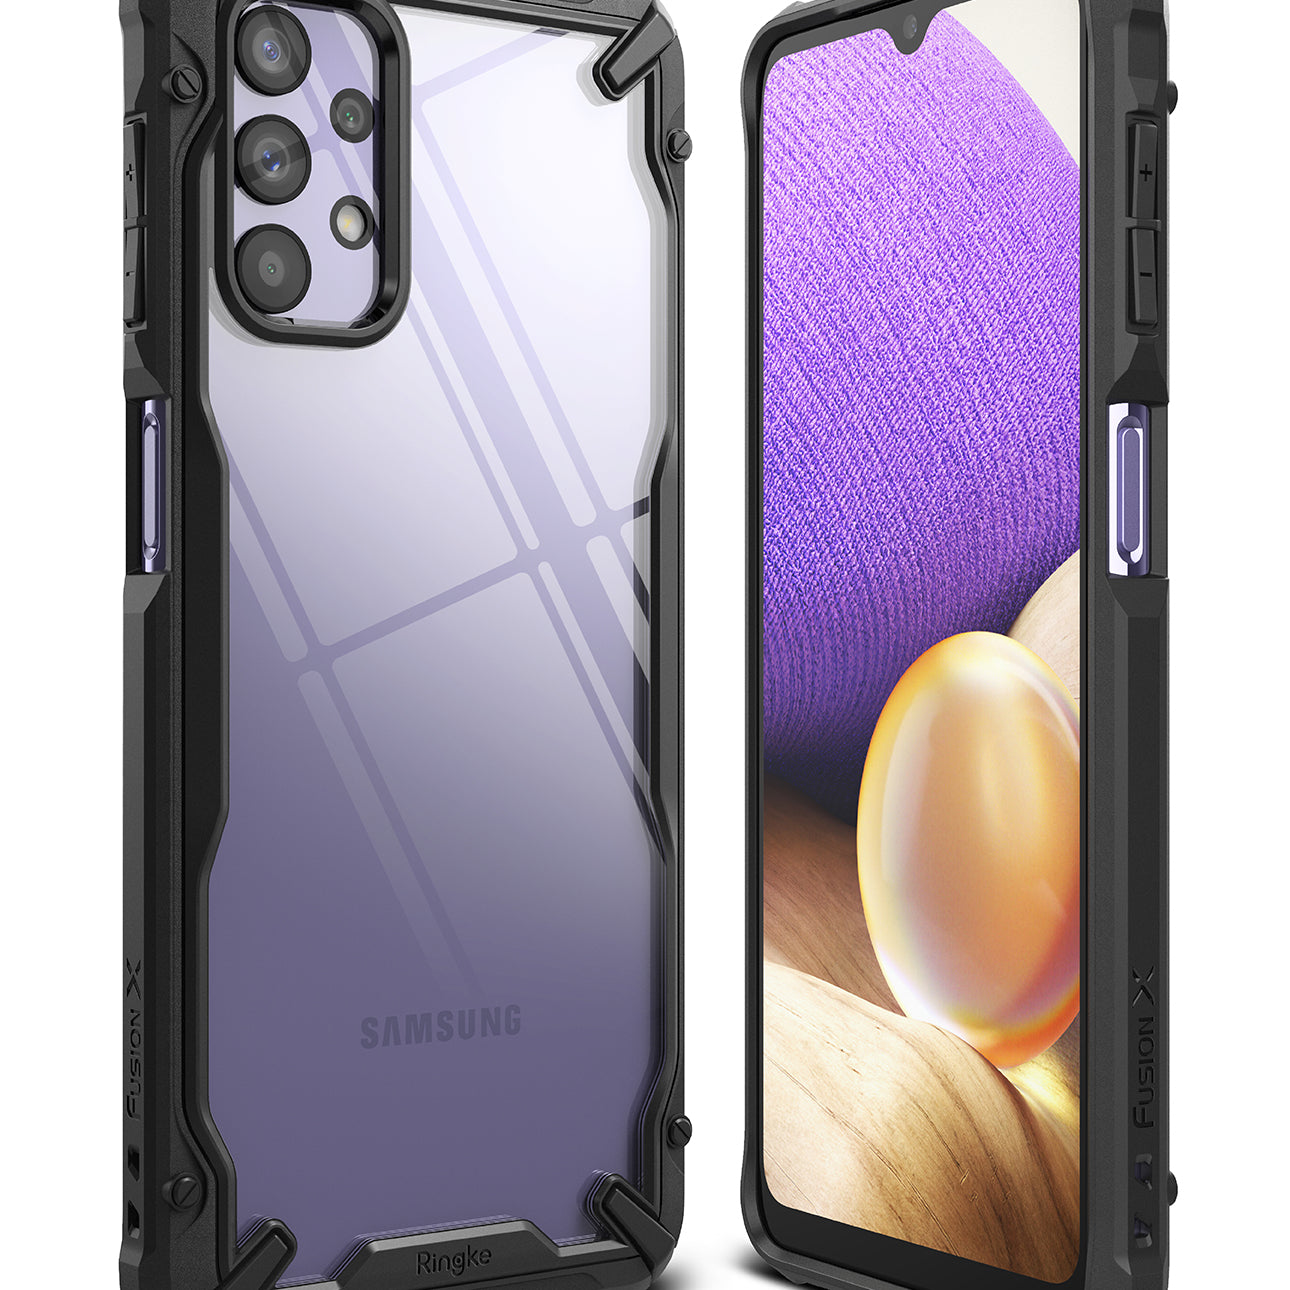 Galaxy A32 5G Case | Fusion-X